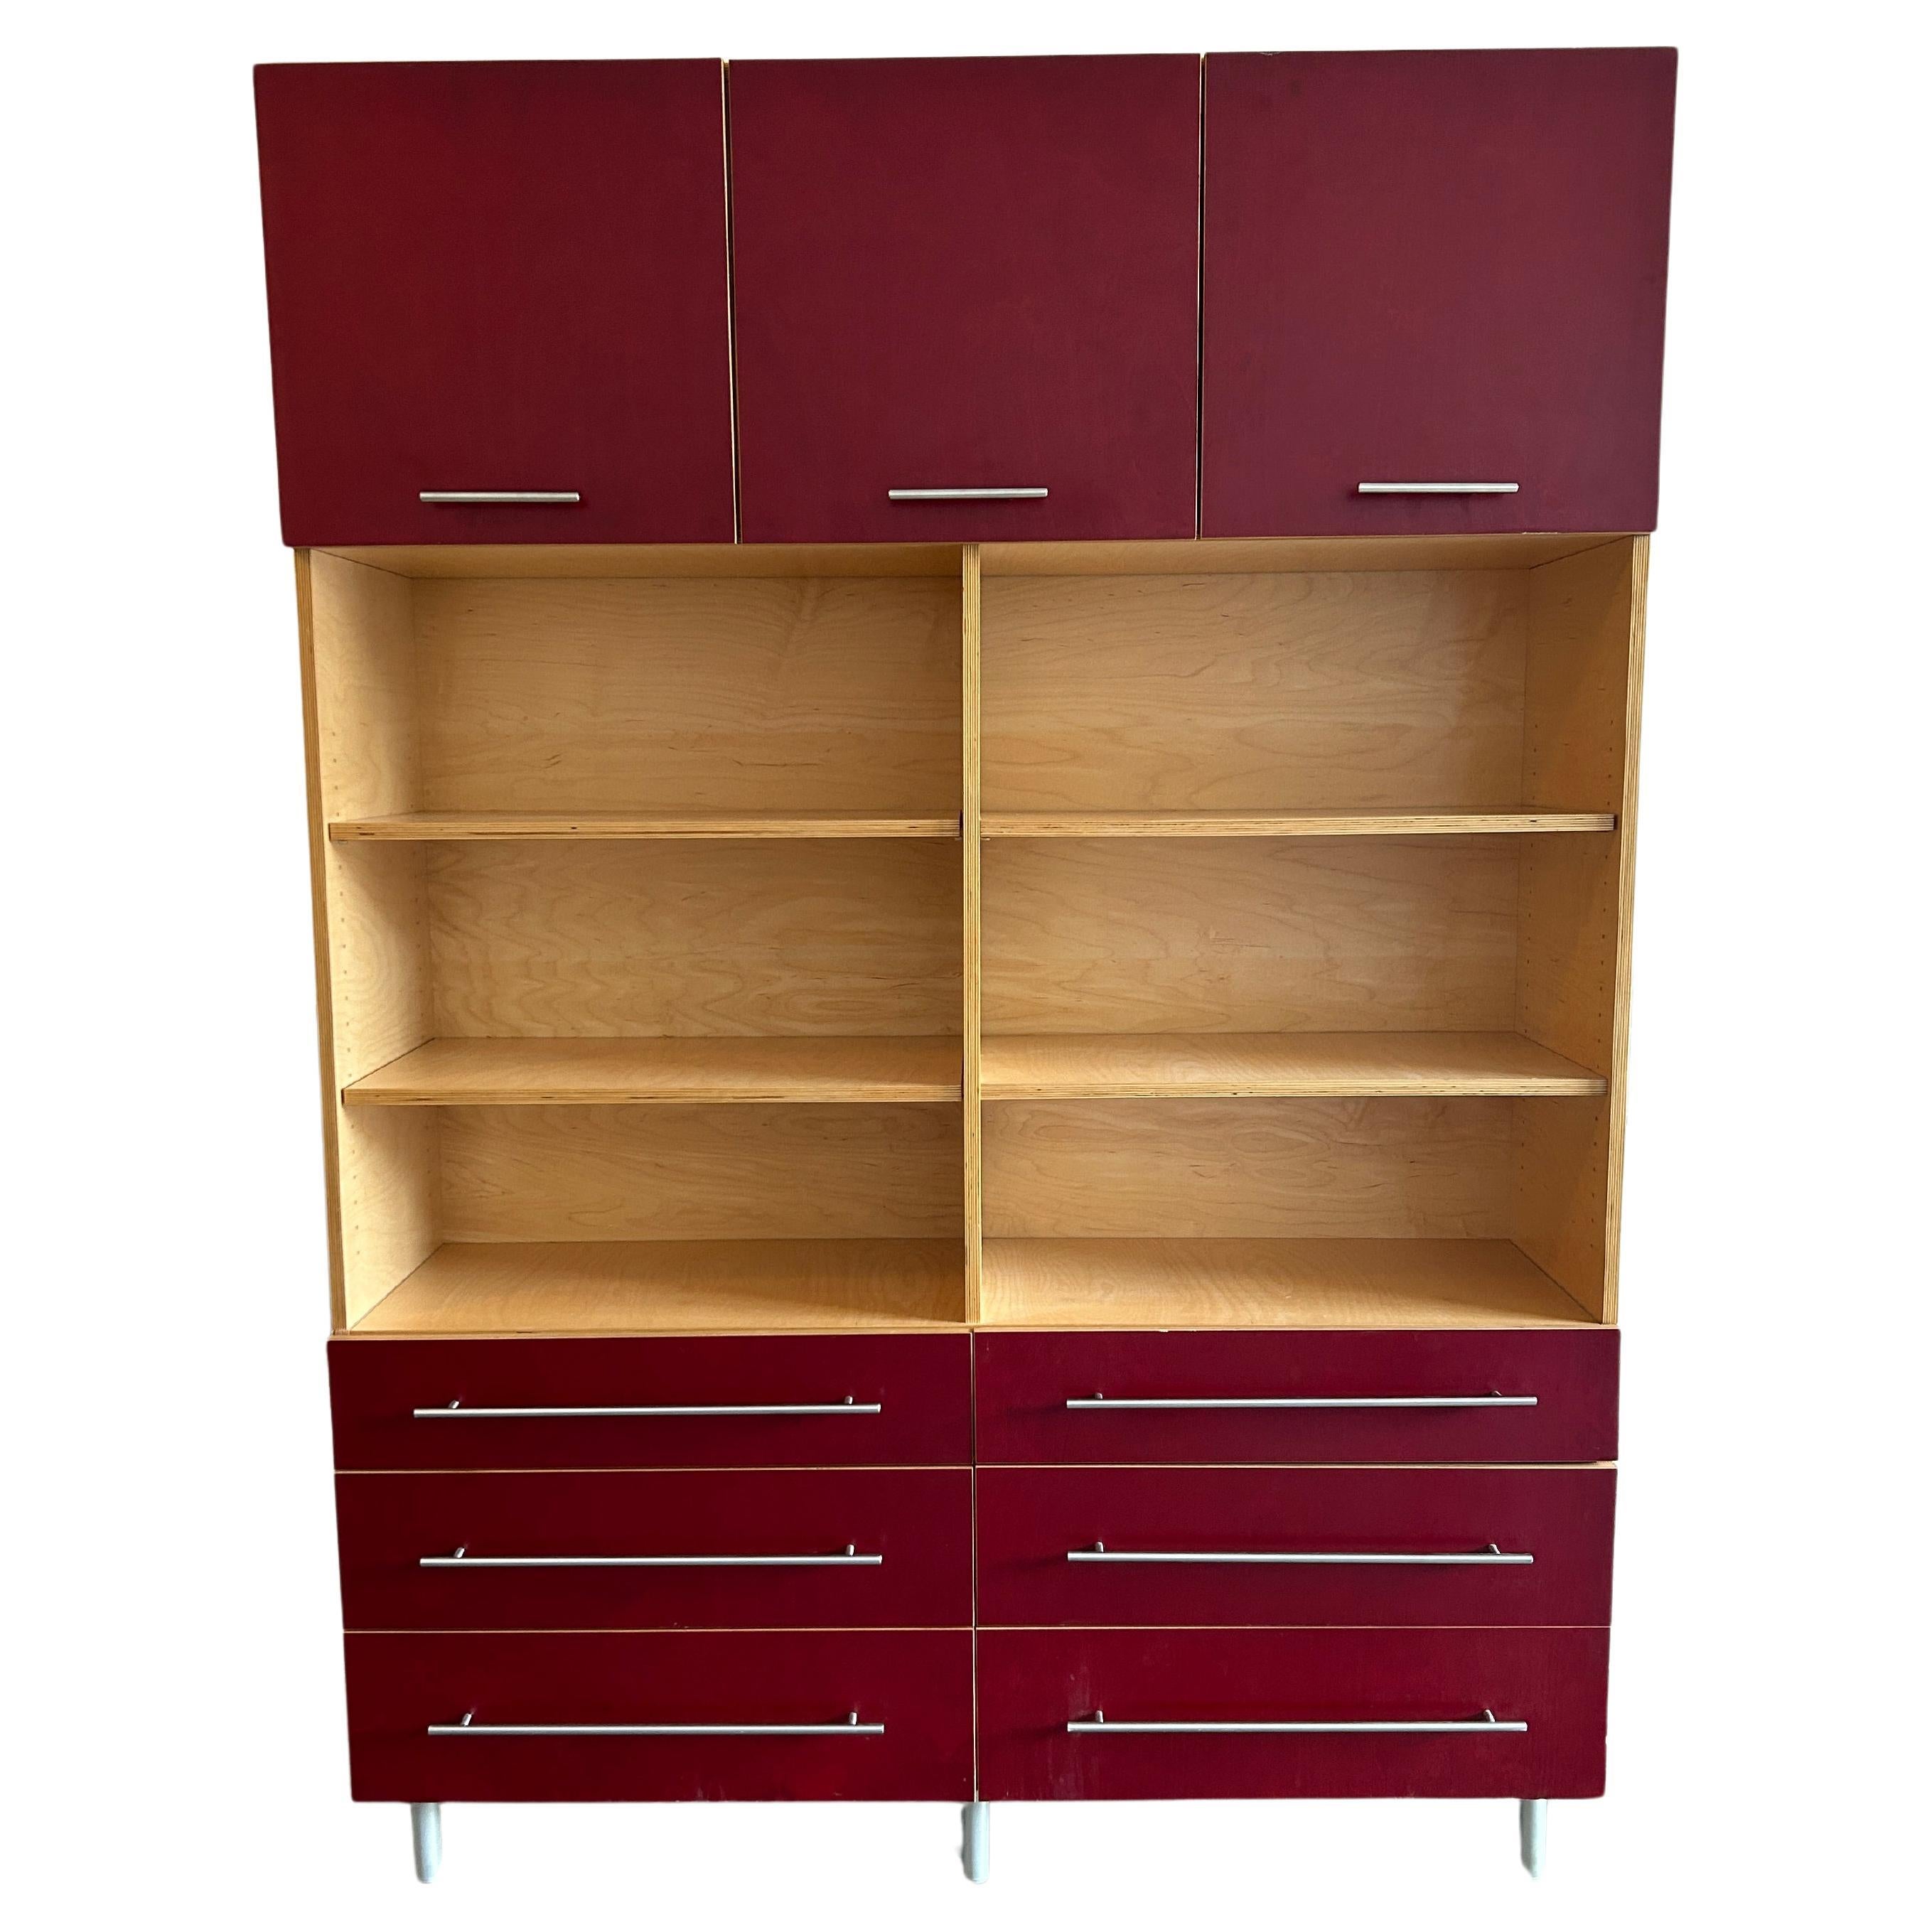 Modern custom high end plywood wall unit dresser credenza upper cabinets shelves For Sale